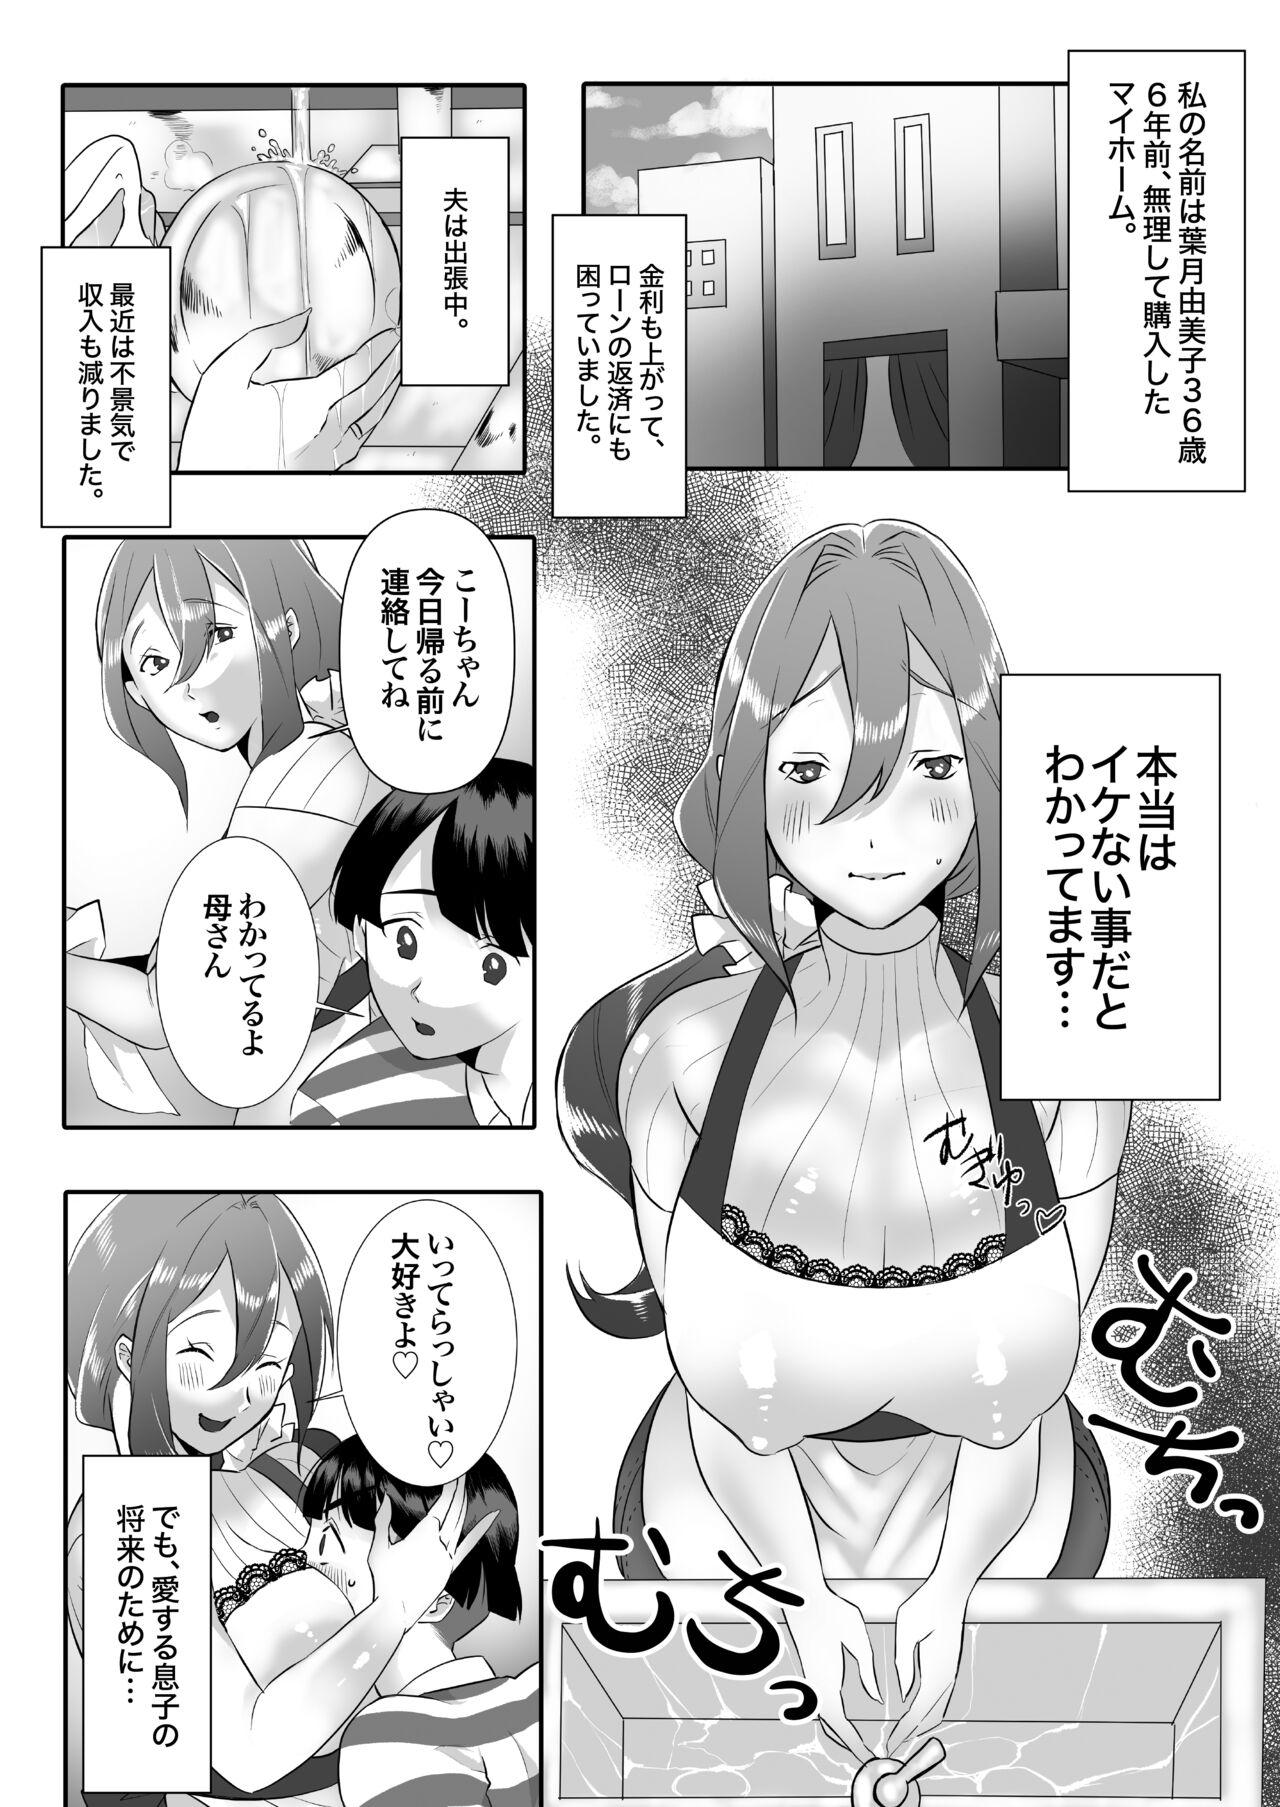 Paja DeliHeal Yondara Tomodachi no Kaa-chan ga Kita. - Original Boobs - Page 5